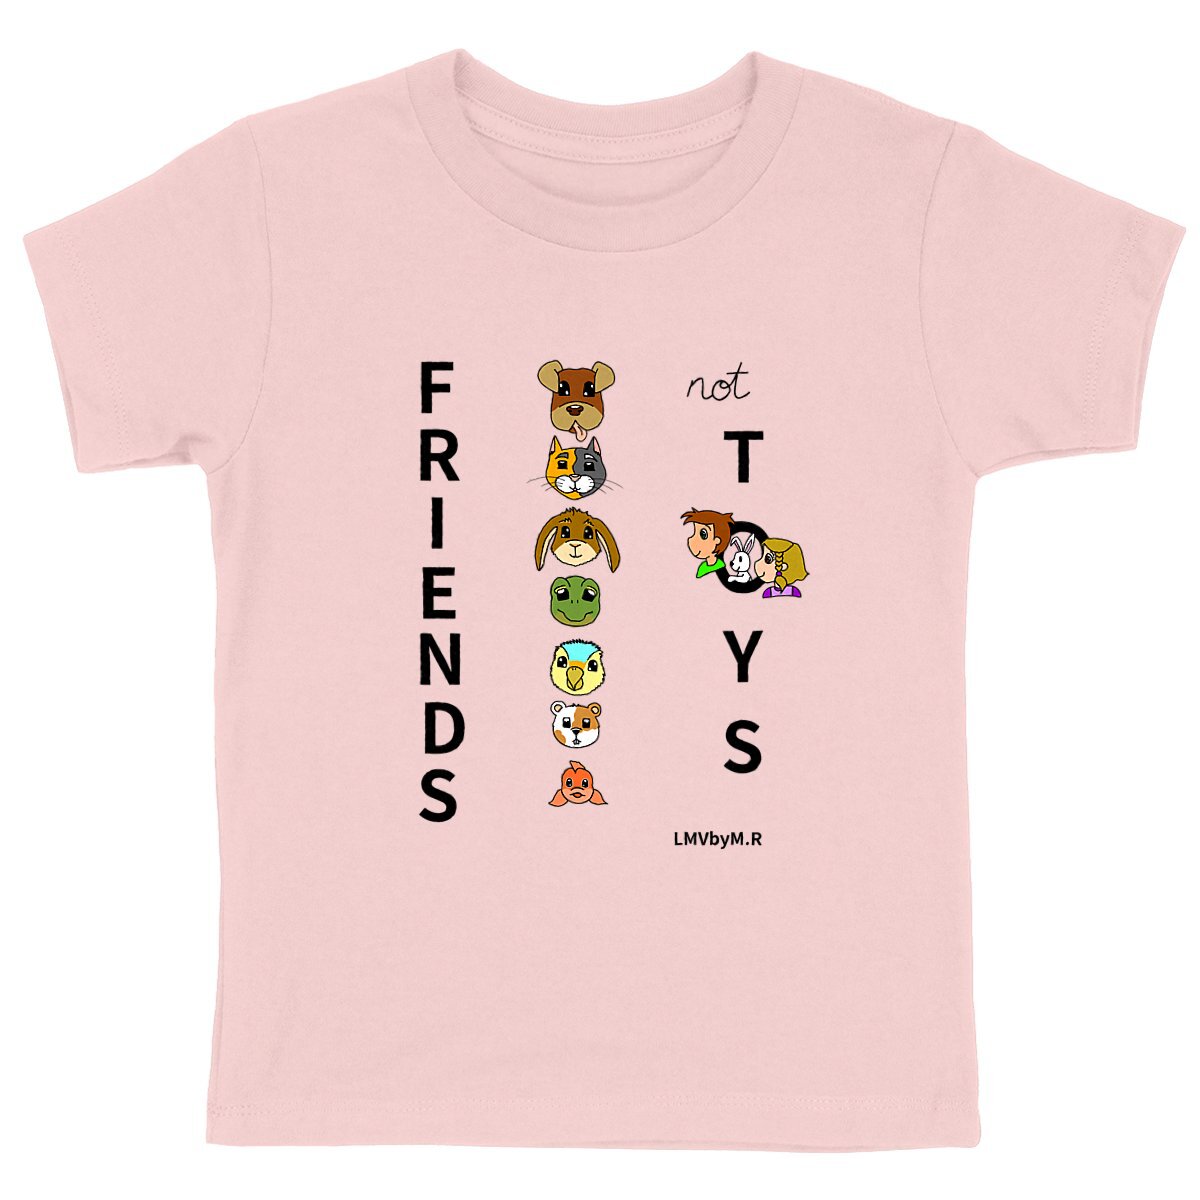 Tee-shirt Bio Enfant LMV FRIENDS NOT TOYS